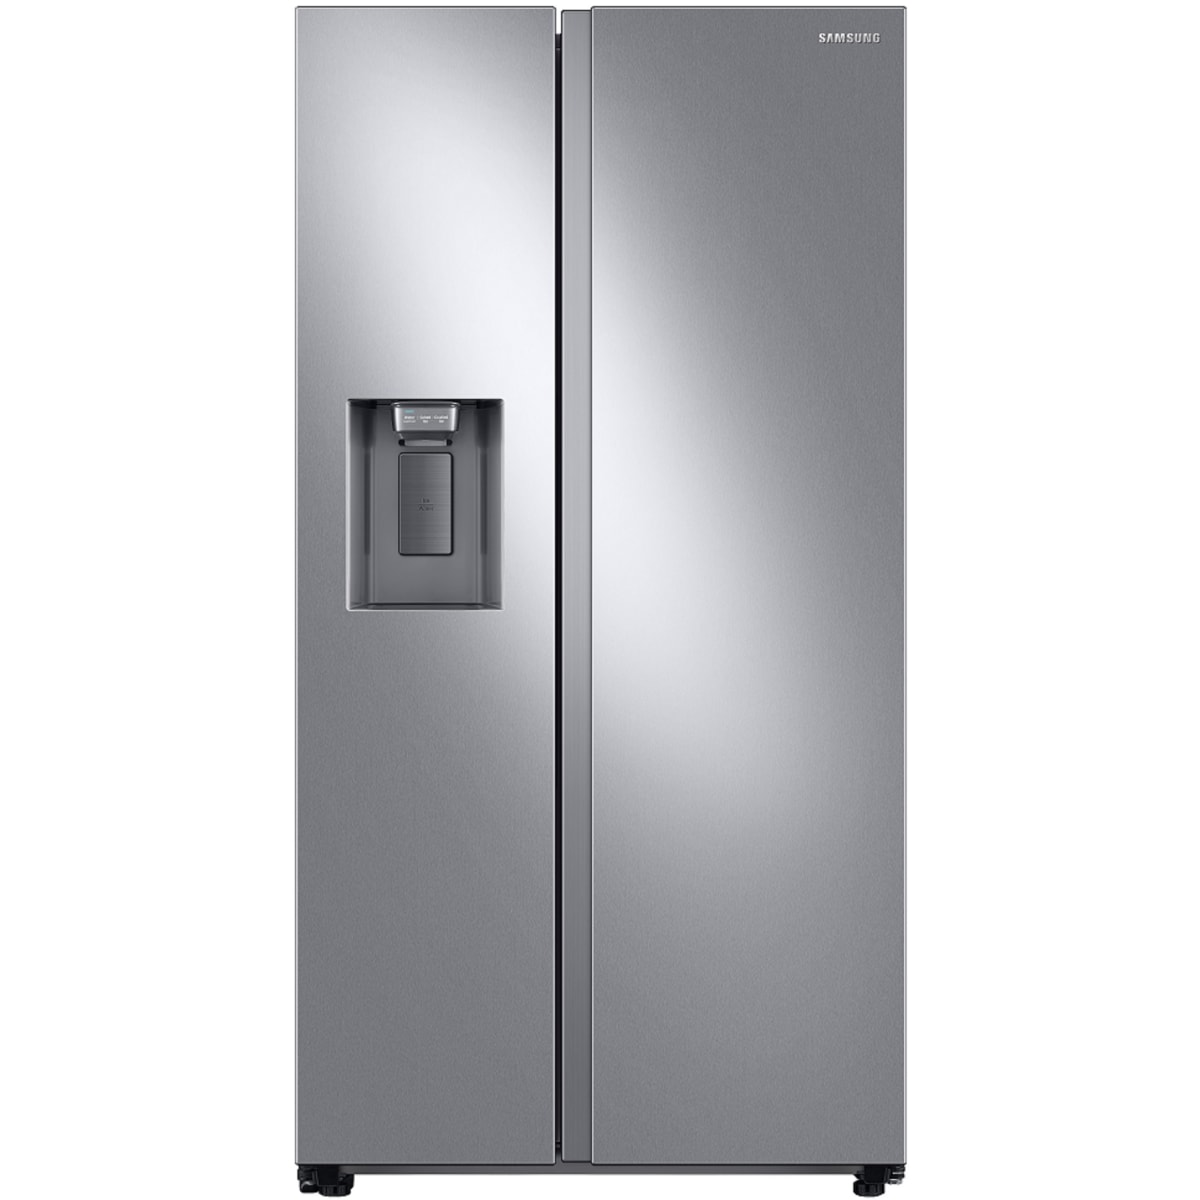 Tips for an organized Samsung refrigerator